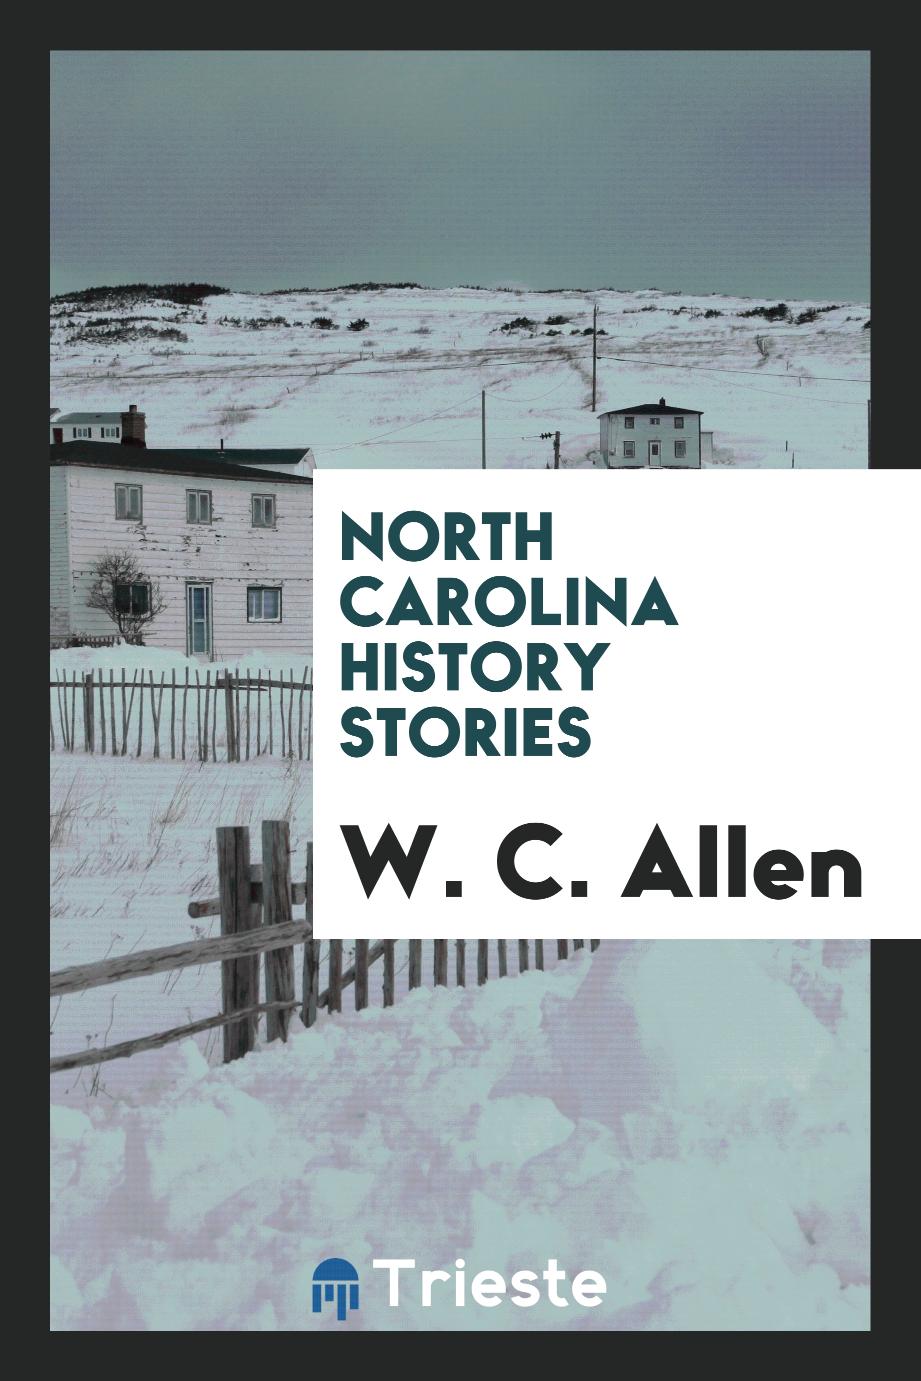 North Carolina history stories